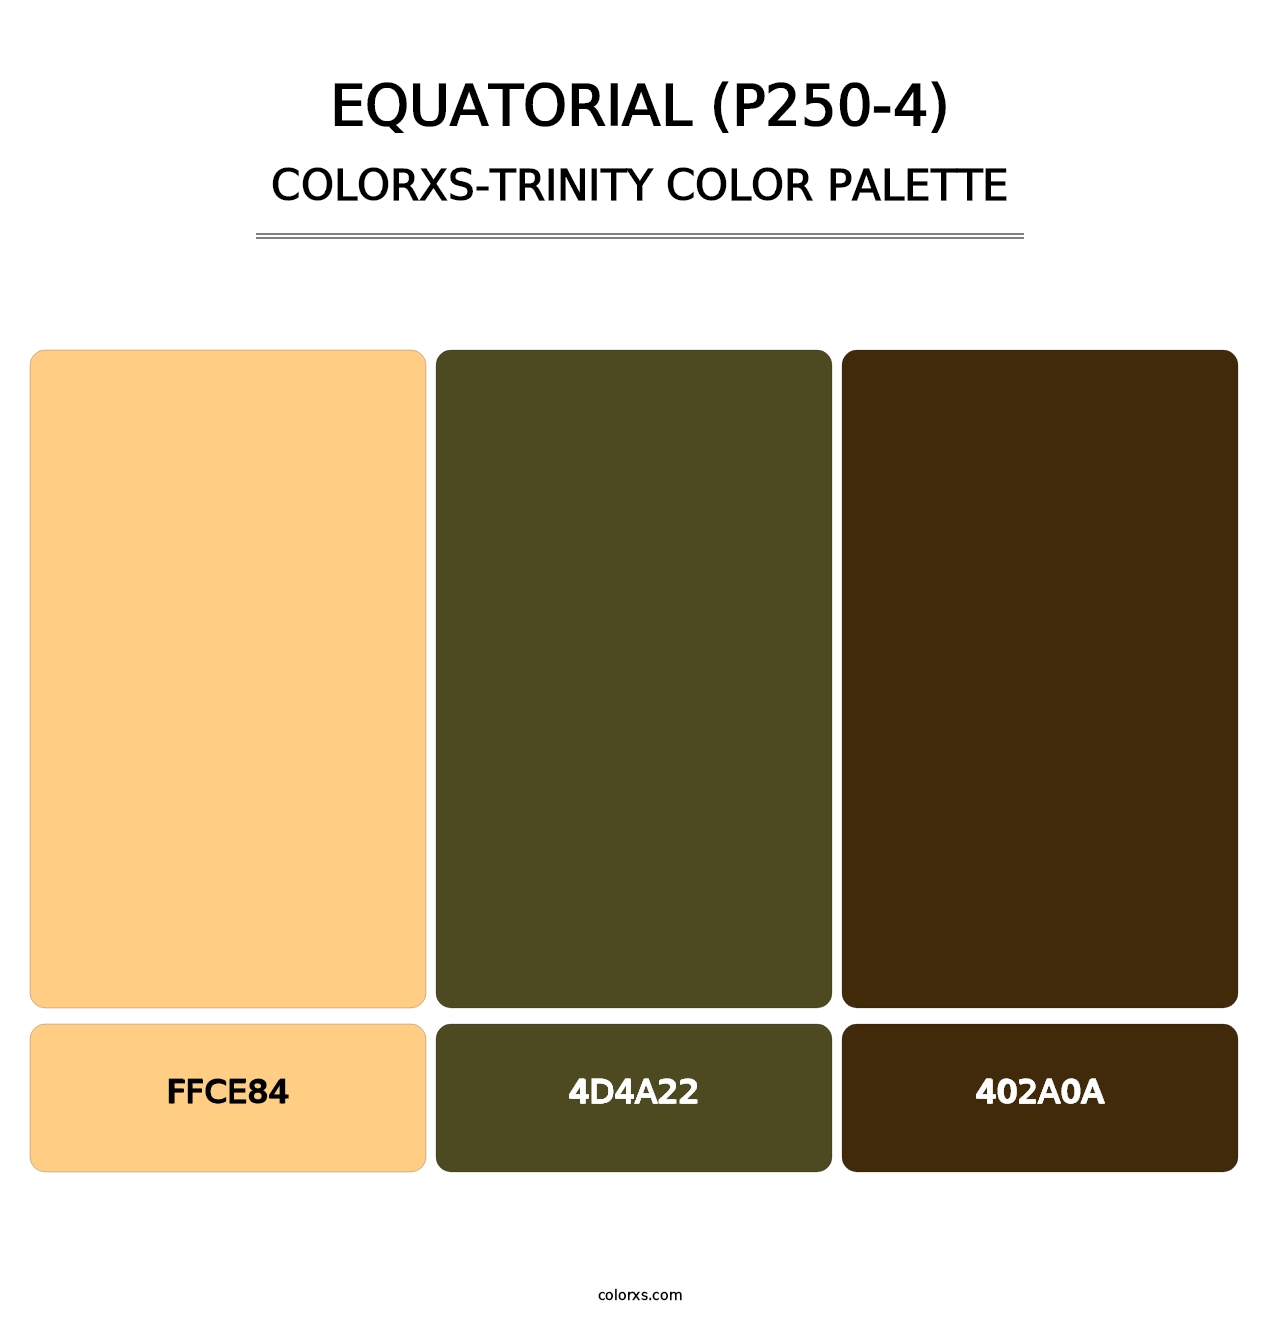 Equatorial (P250-4) - Colorxs Trinity Palette